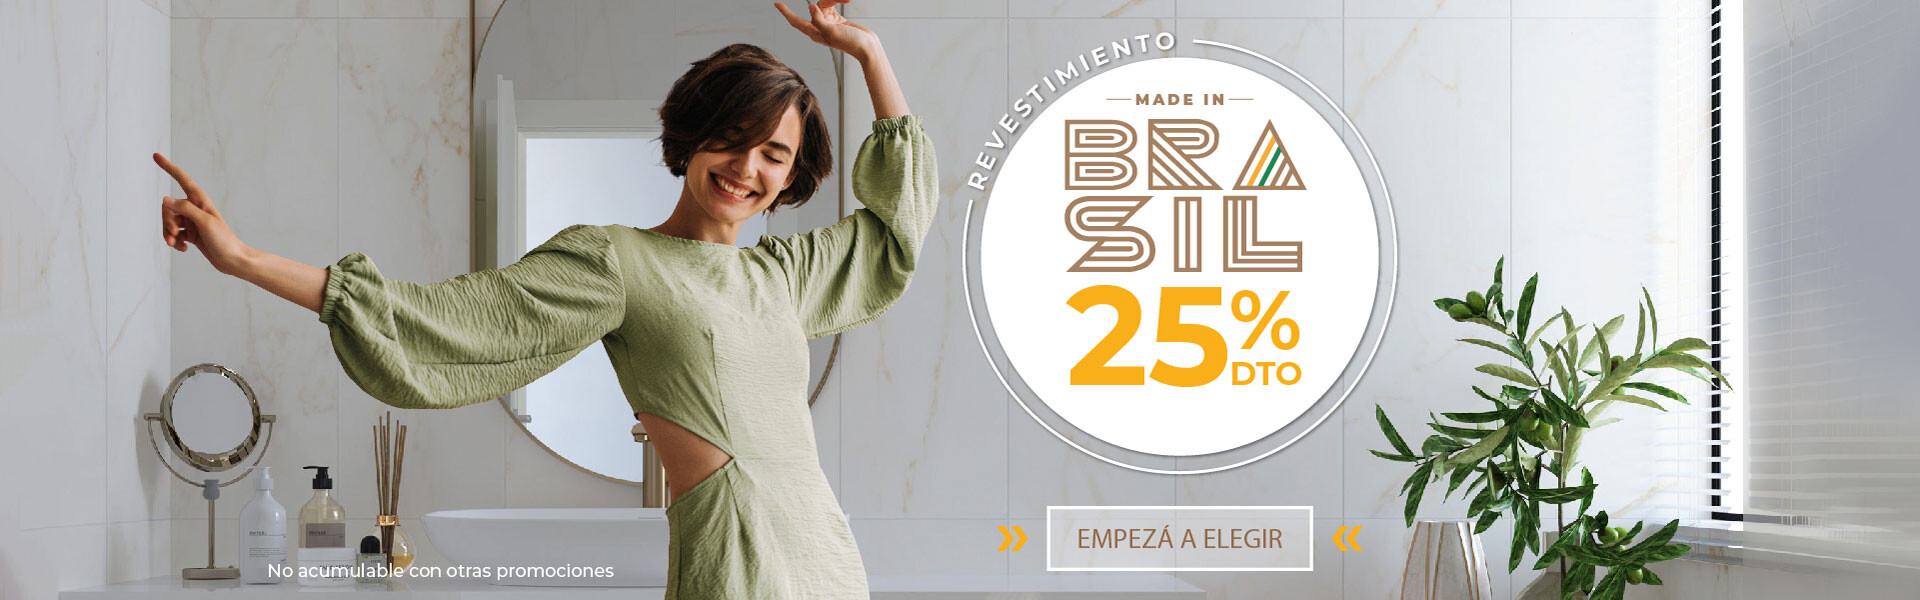 promo brasil 25%off descuento